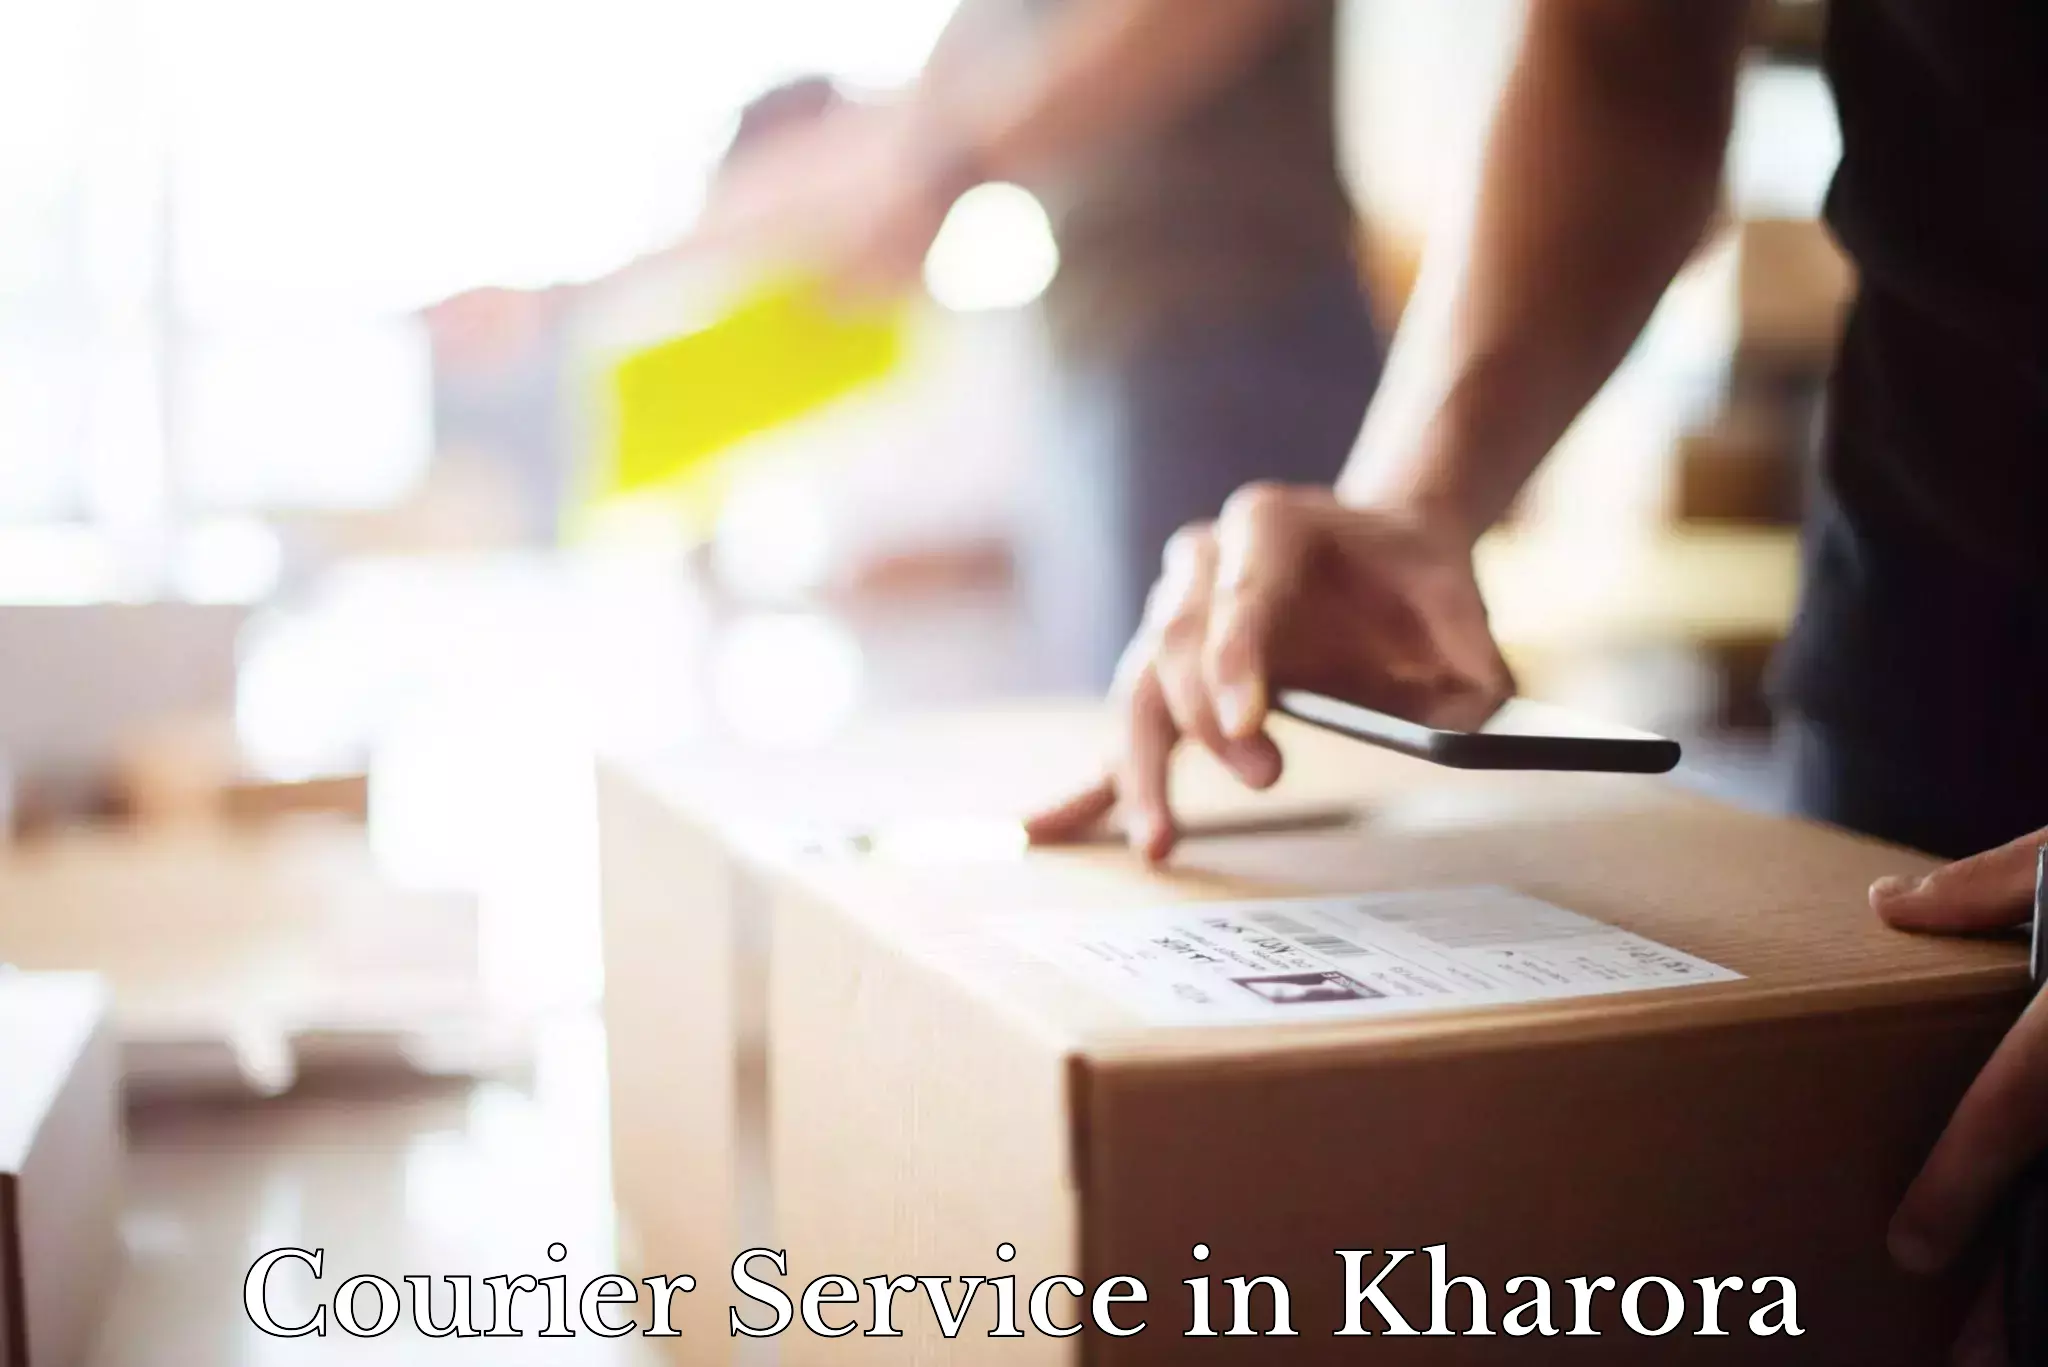 Delivery service partnership in Kharora